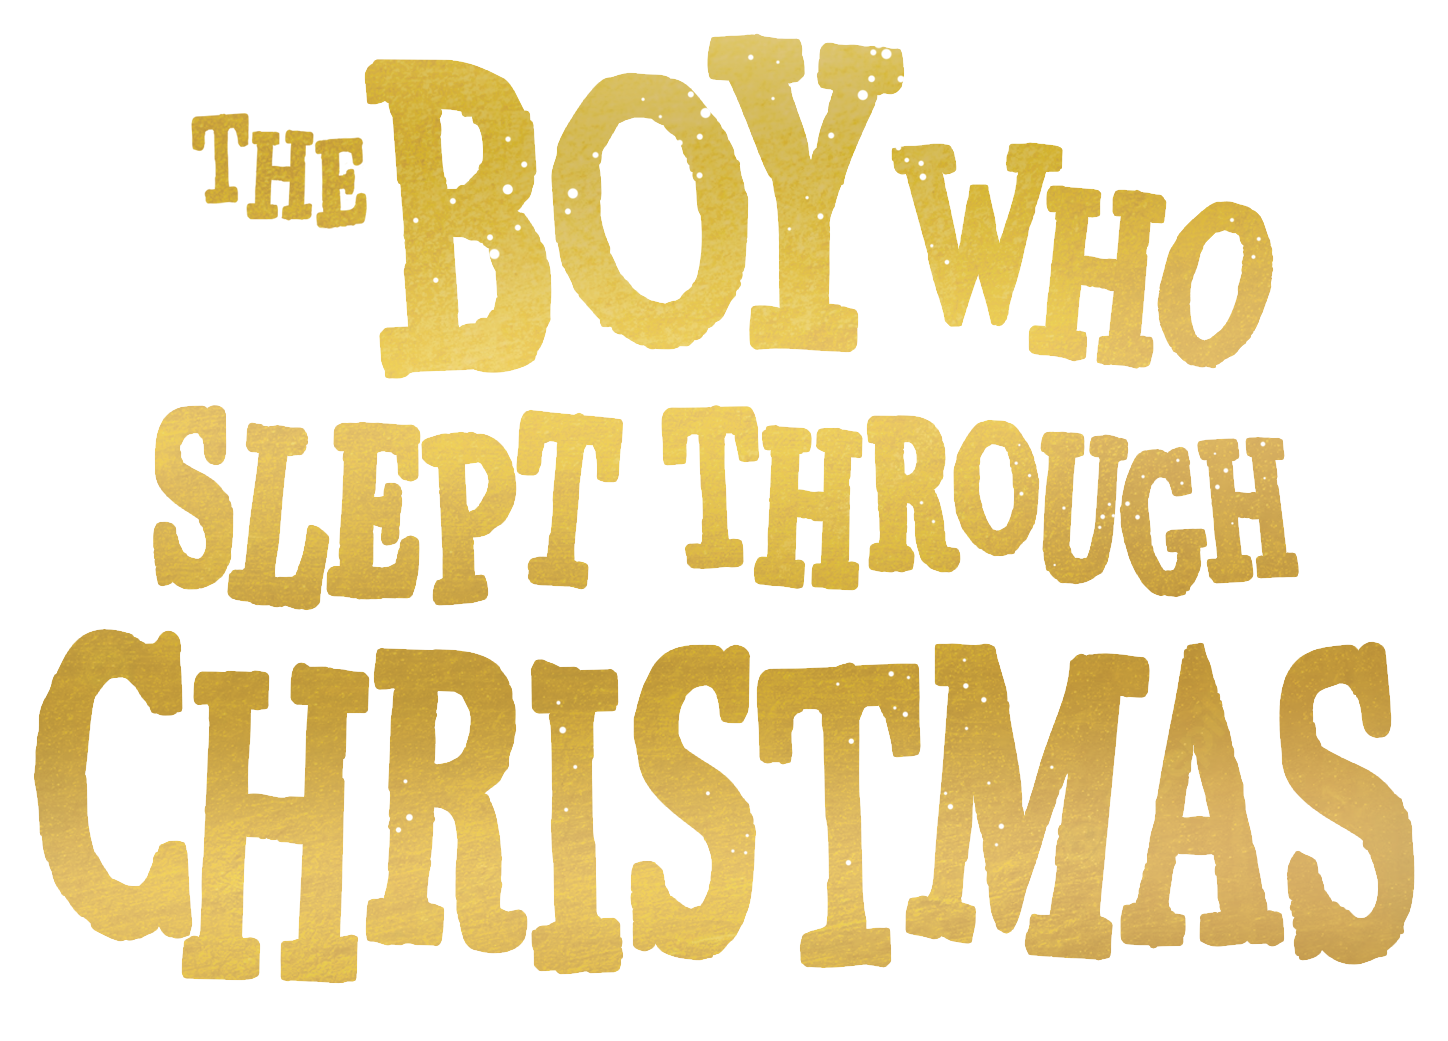 The Boy Who Slept Through Christmas